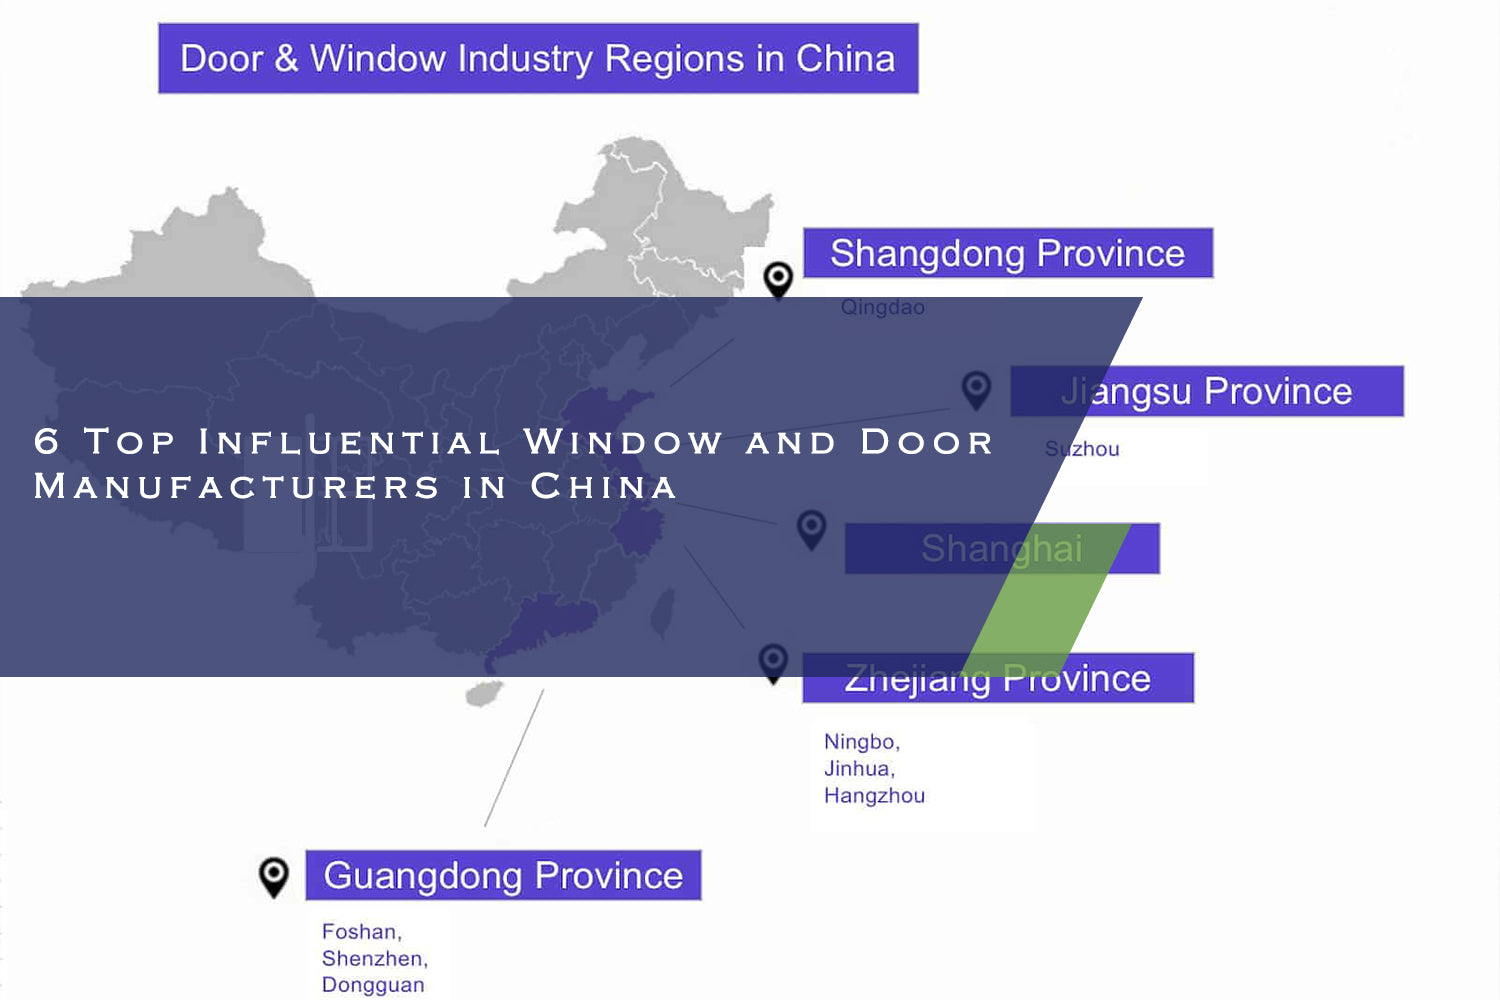 6 Top Influential Window and Door Manufacturers in China